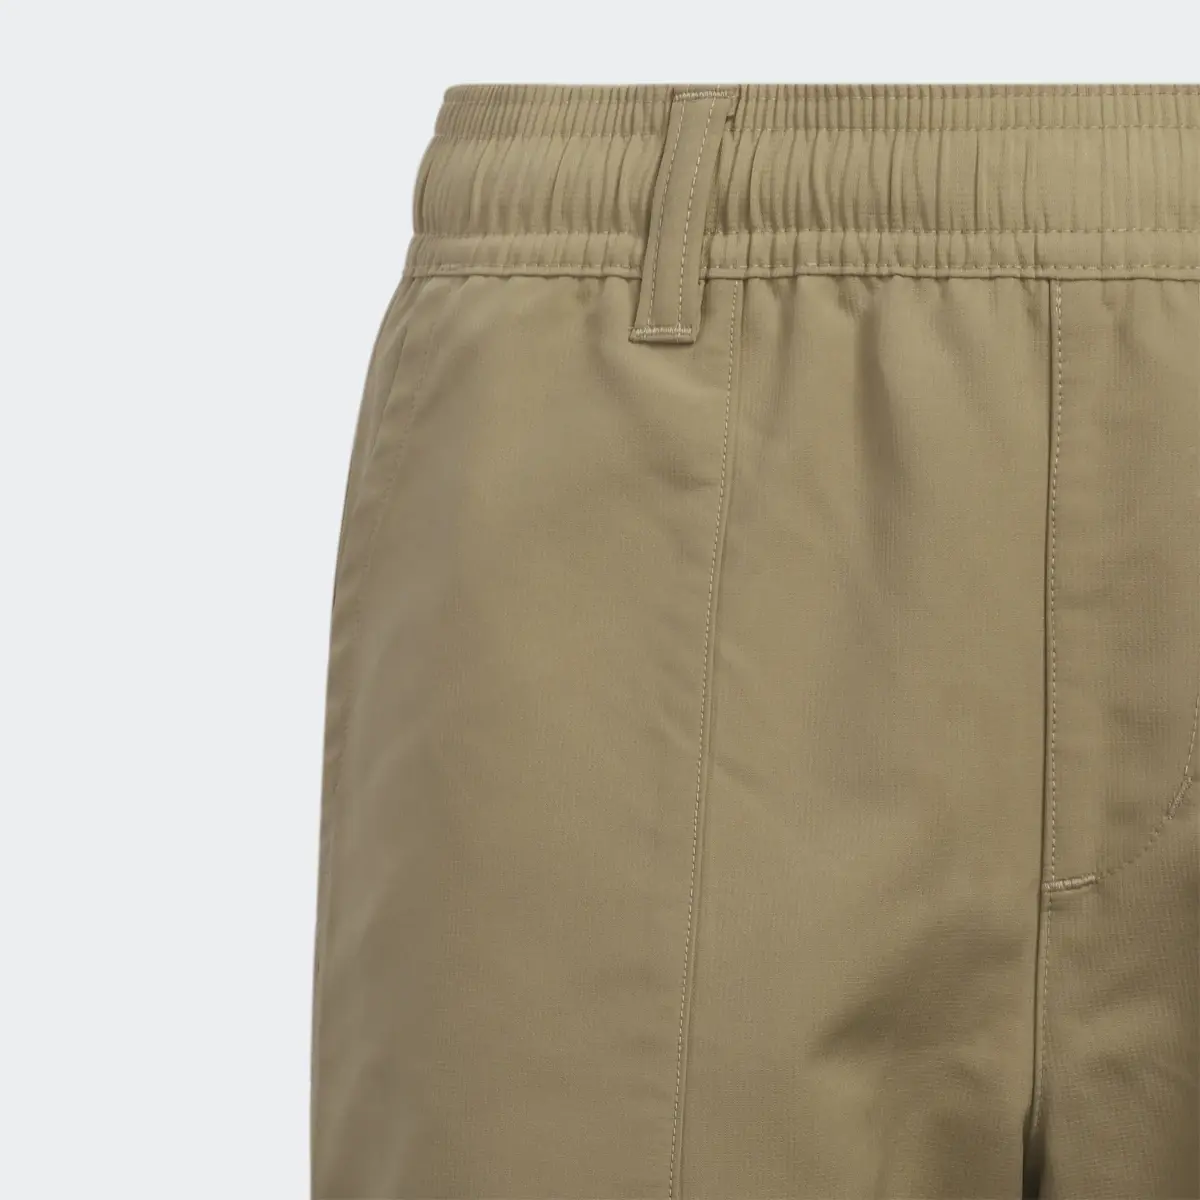 Adidas Versatile Pull-on Shorts. 3